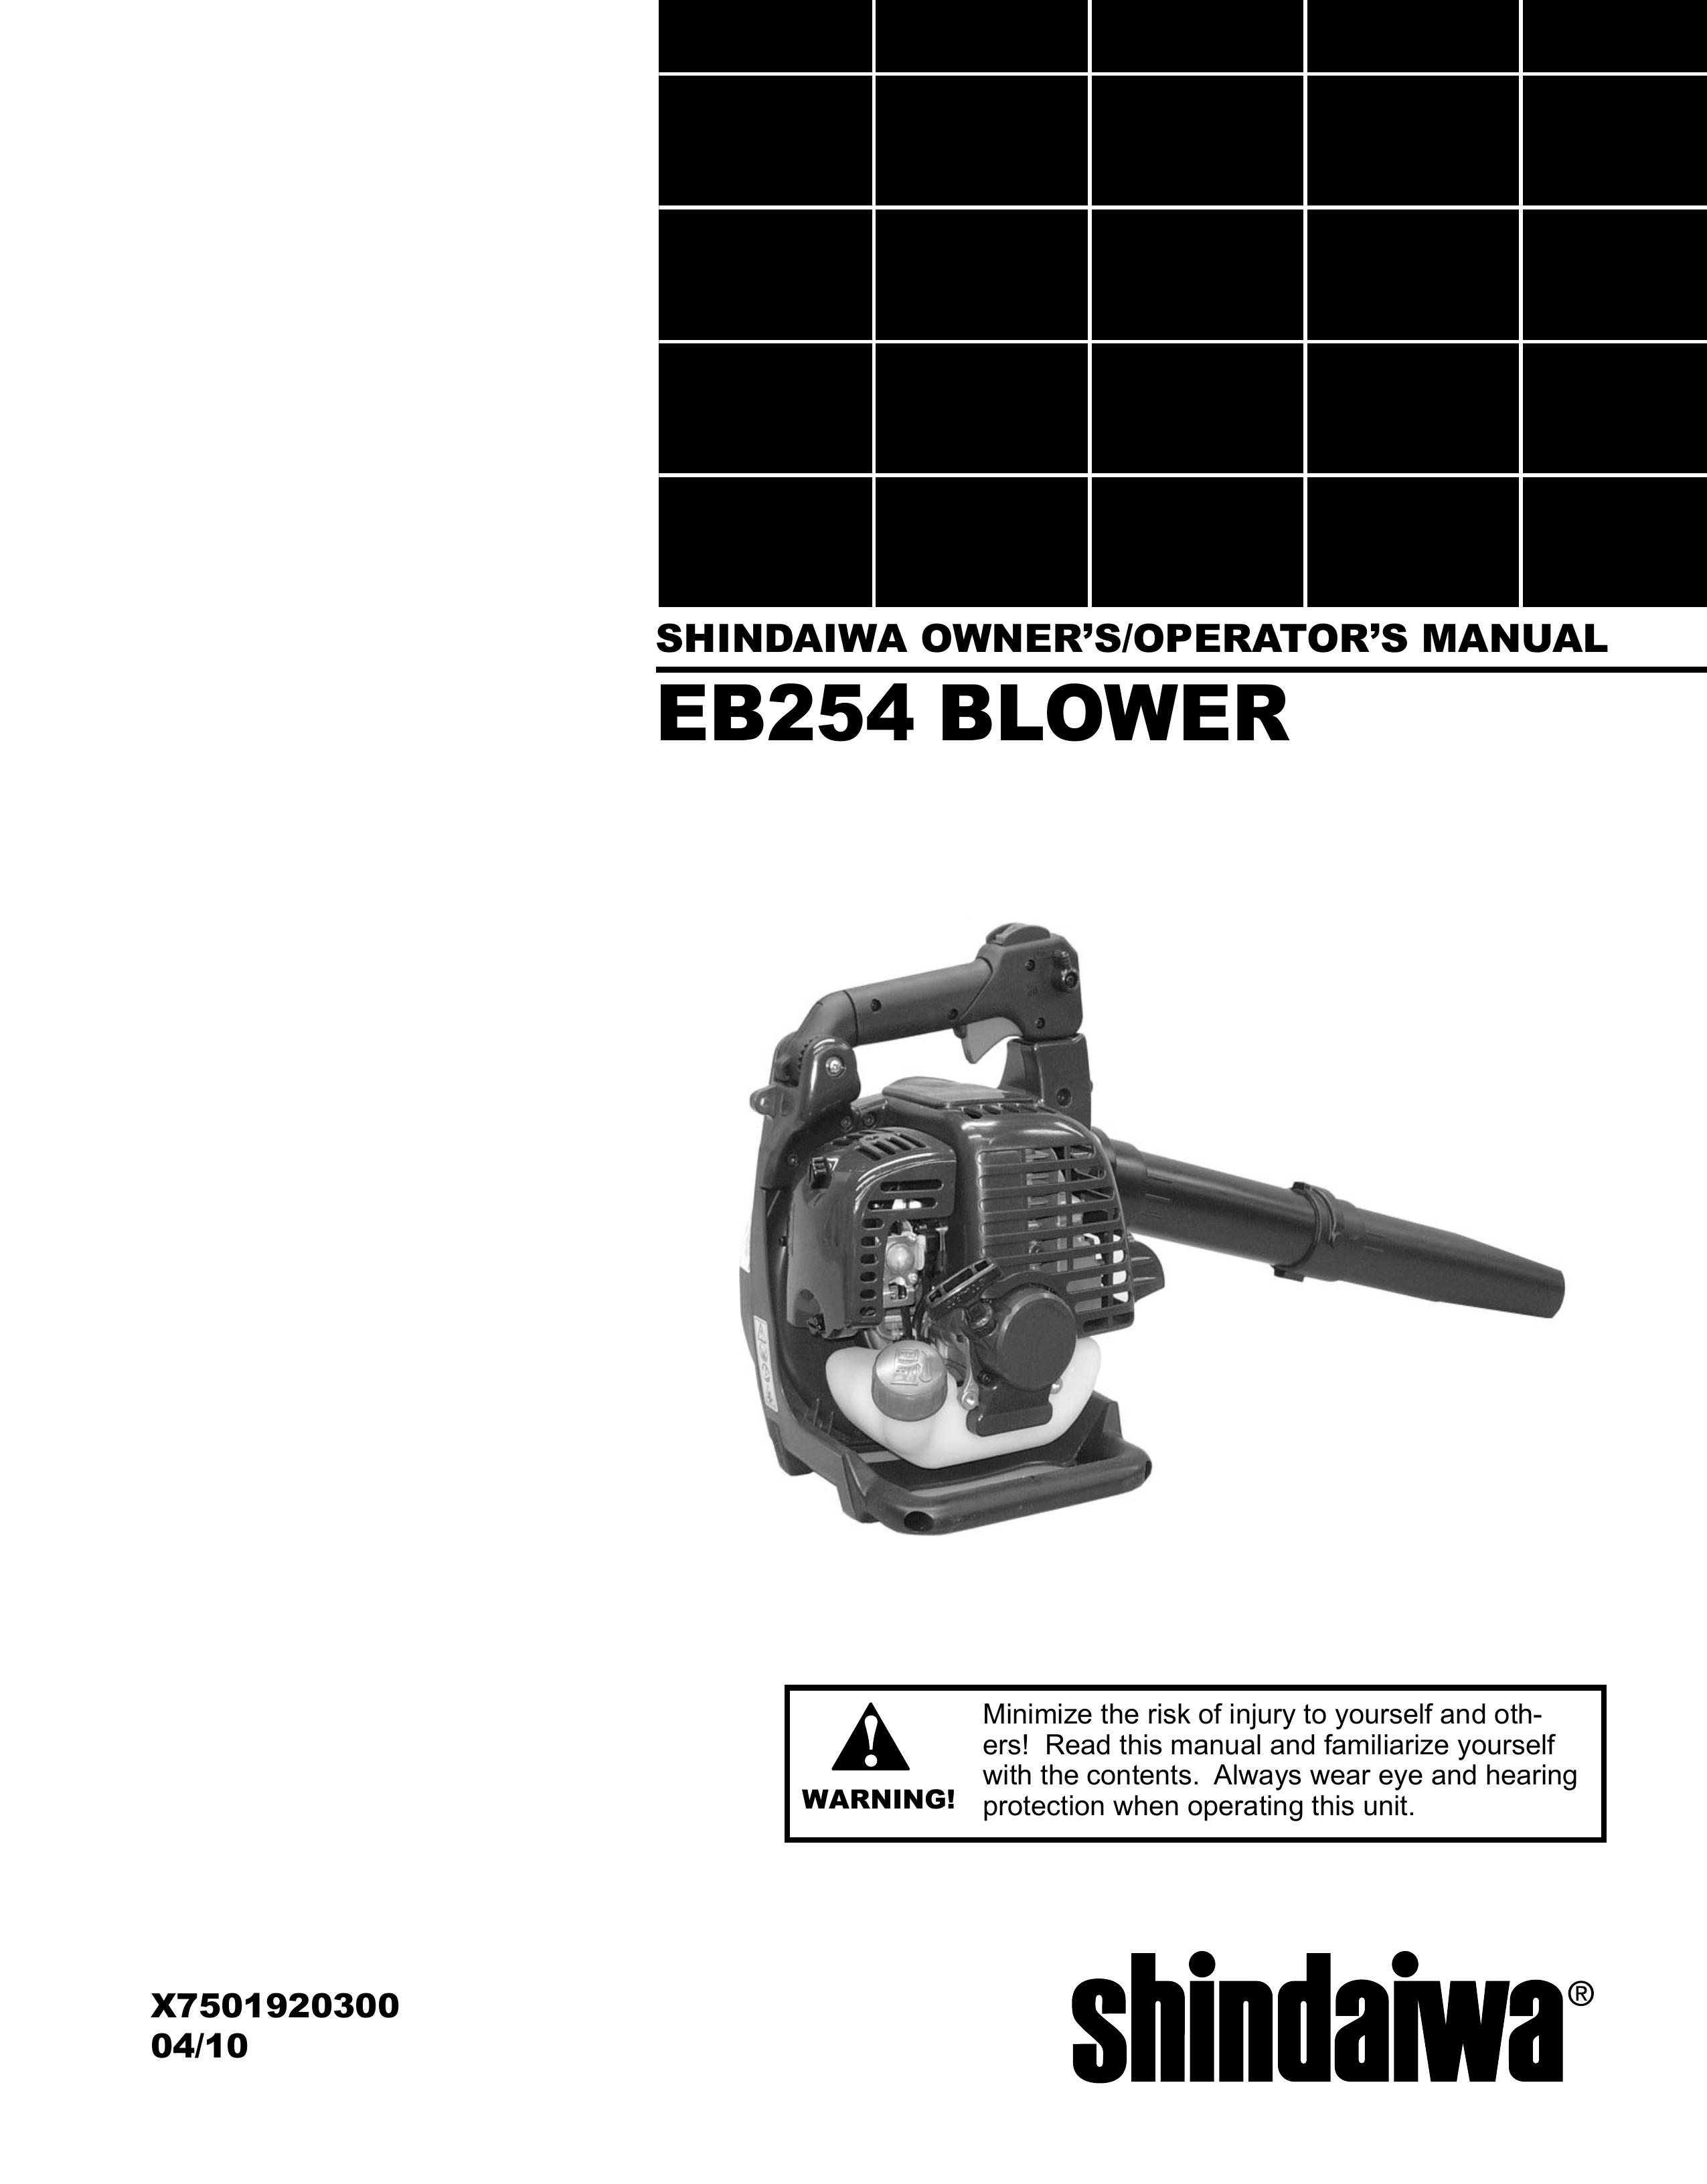 Shindaiwa X7501920300 Blower User Manual